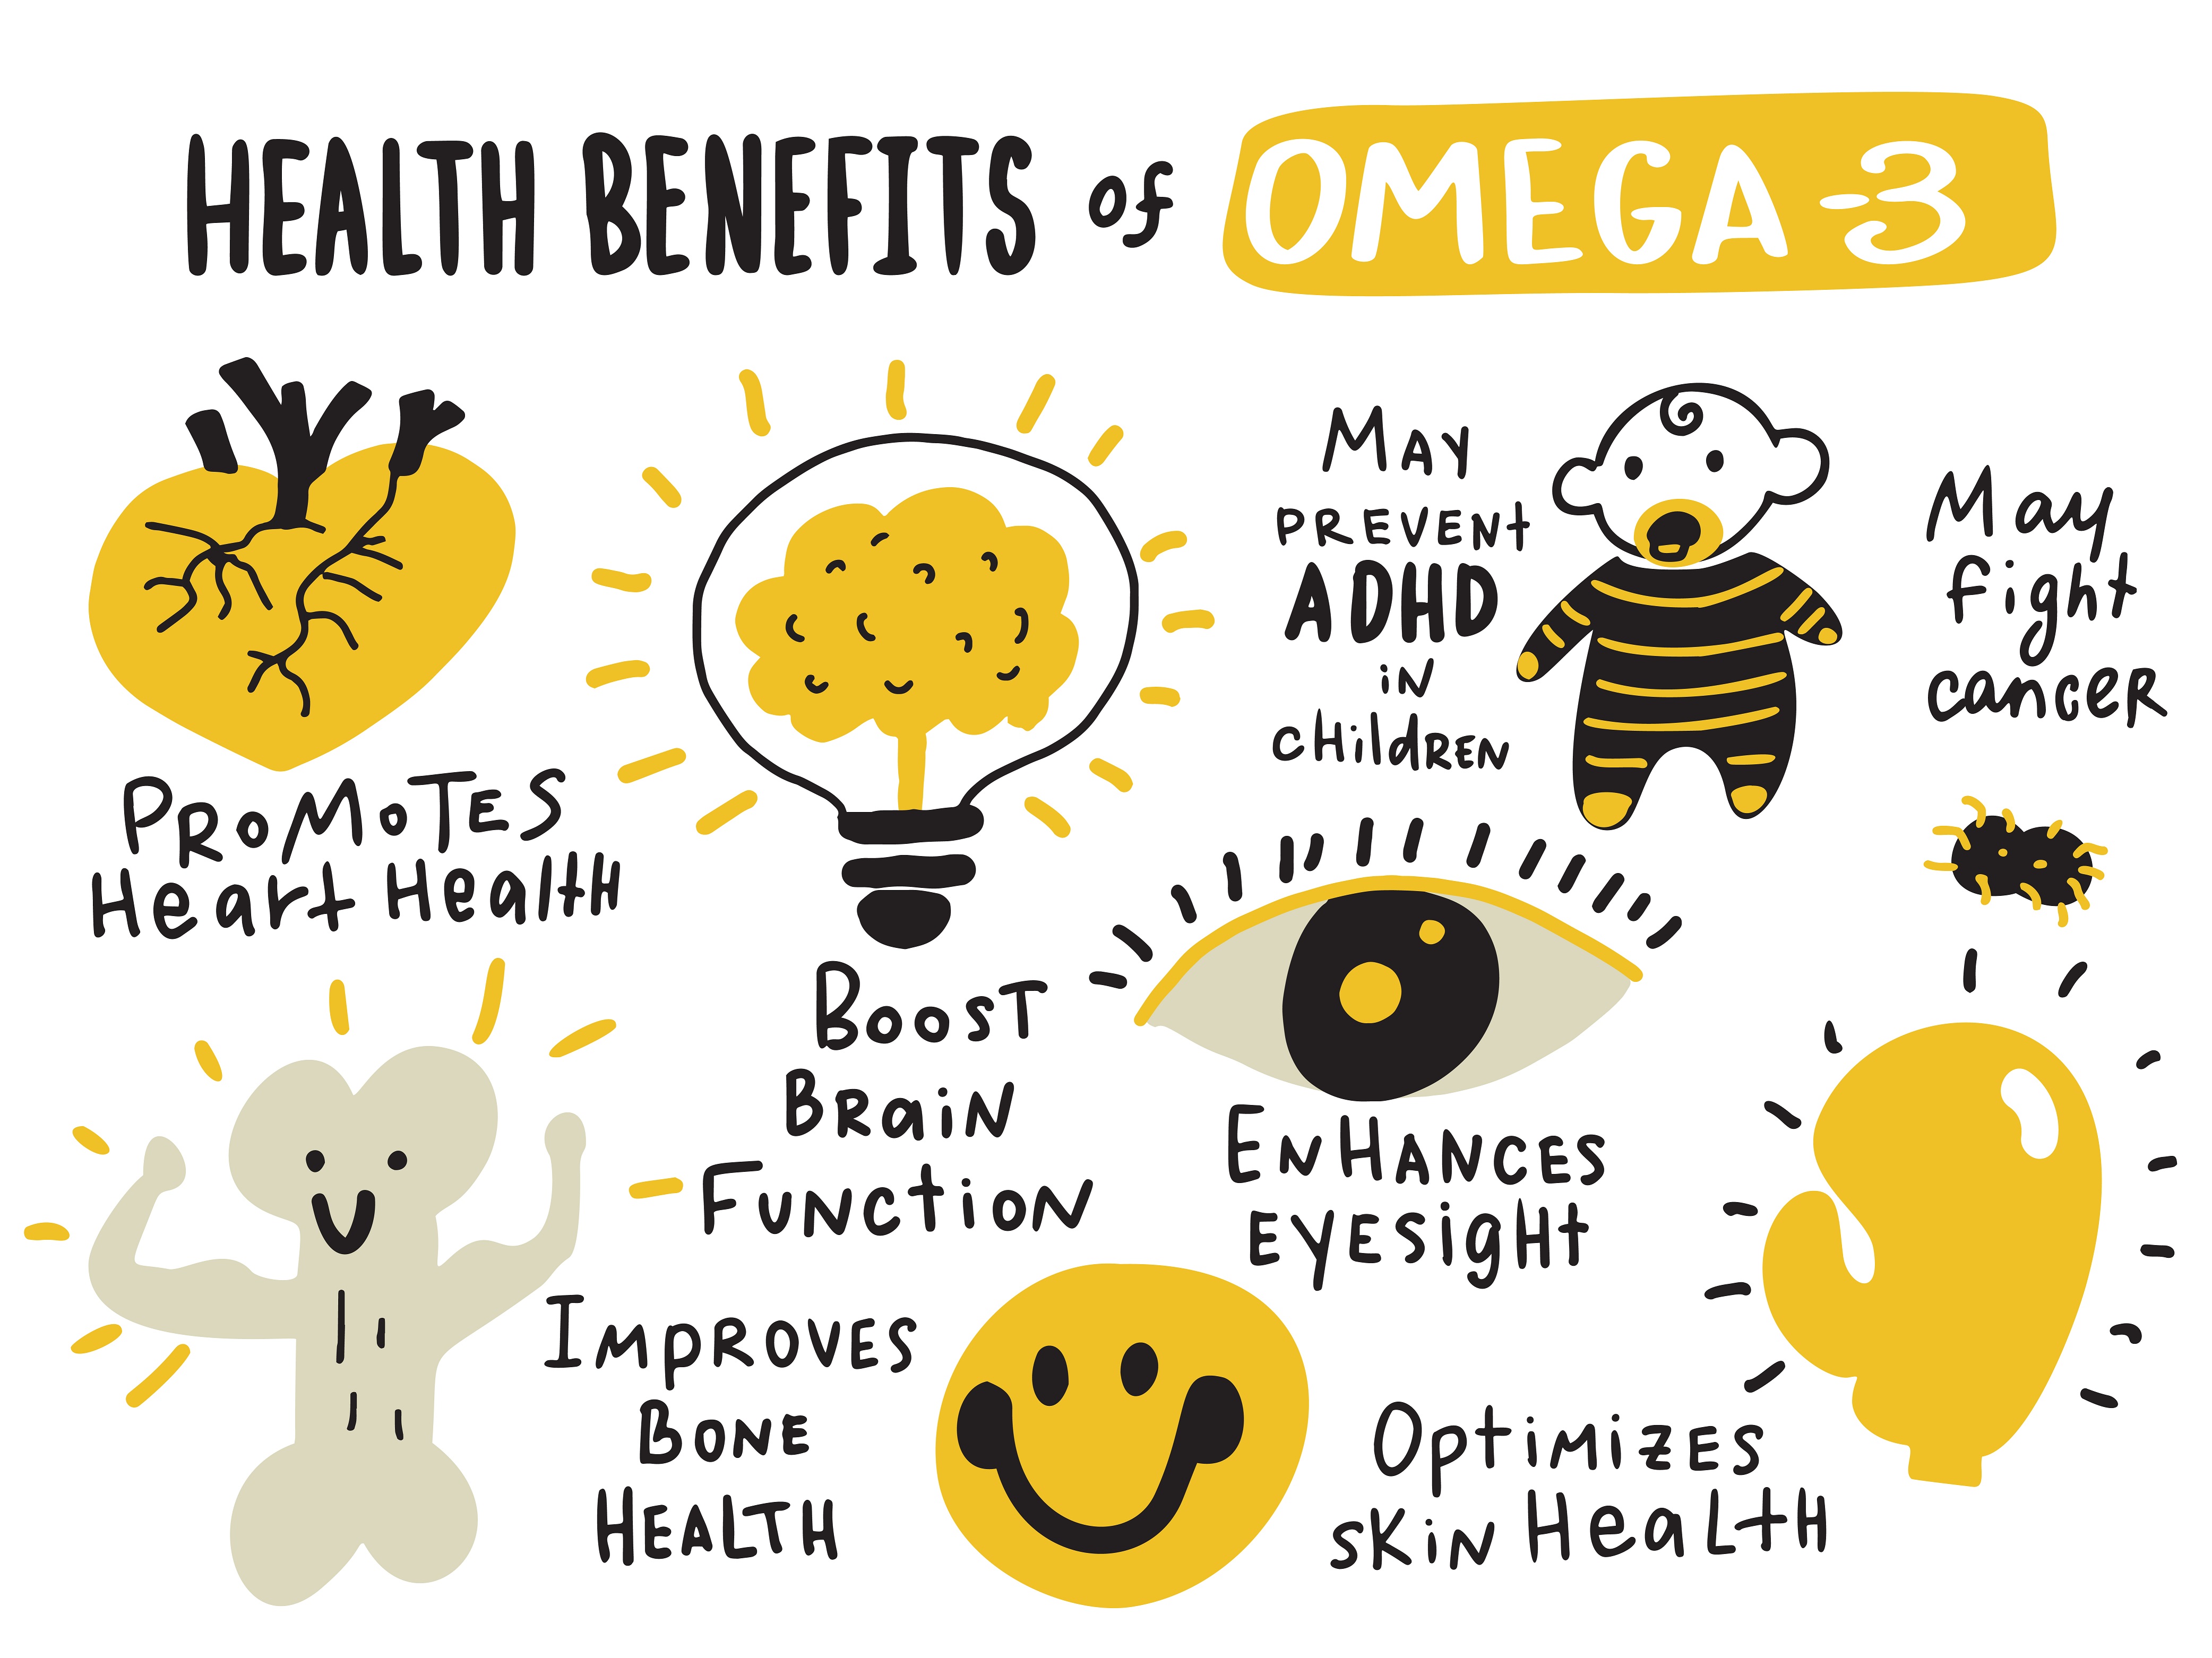 Brief benefits of Omega 3 fatty acids supplementation